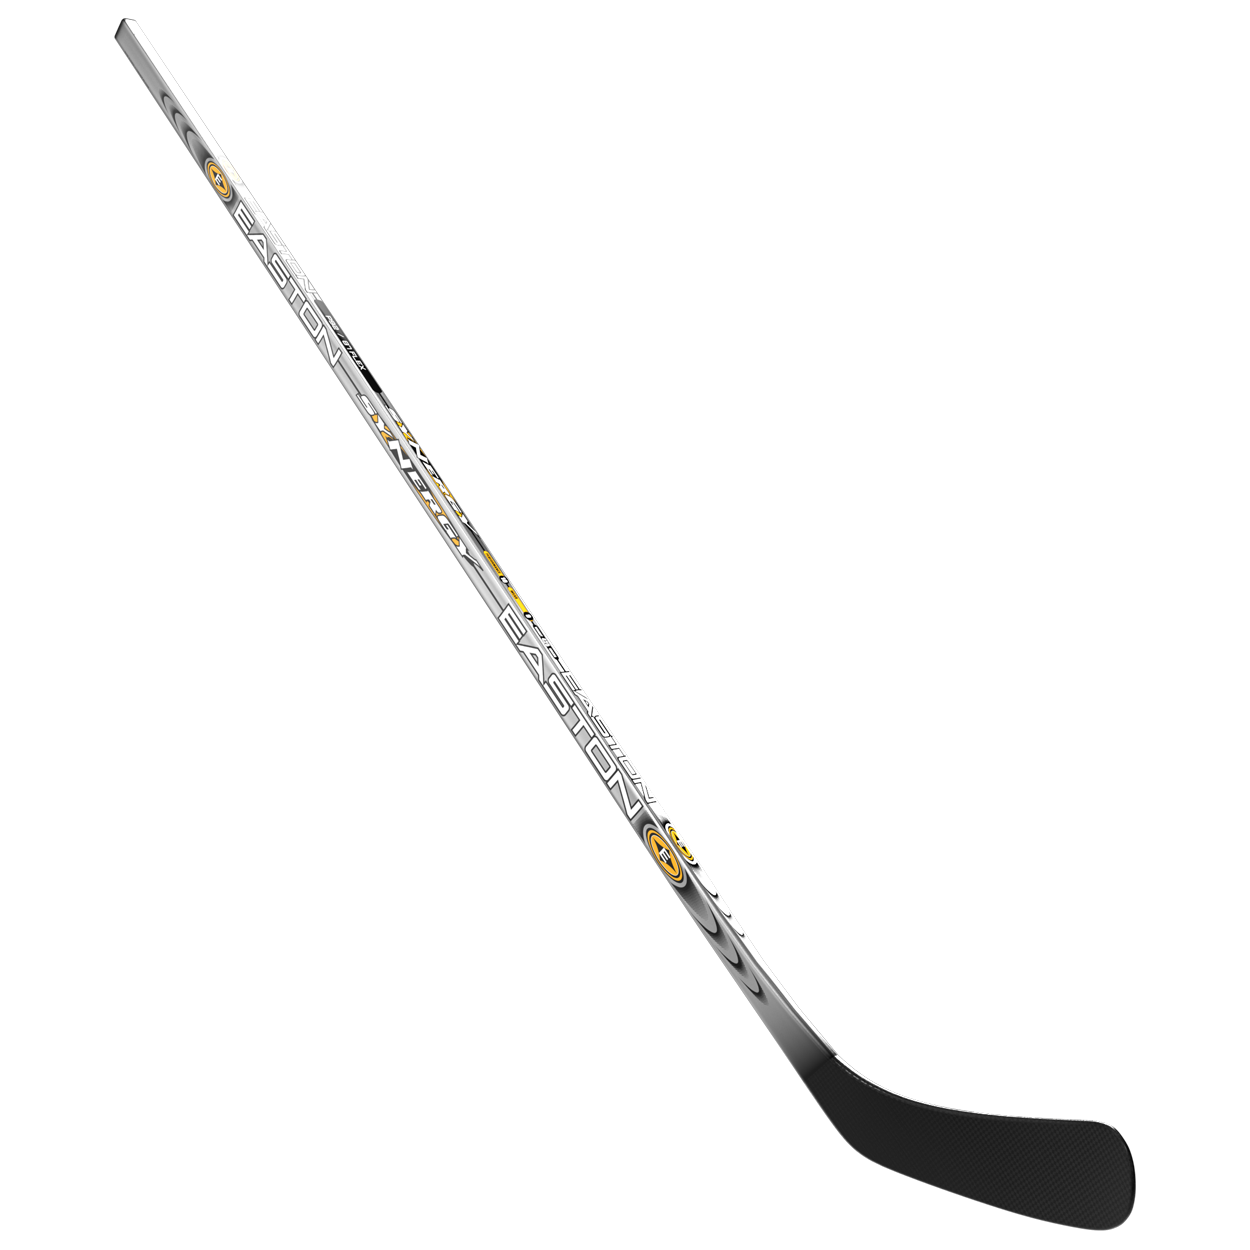 bauer synergy hockey stick